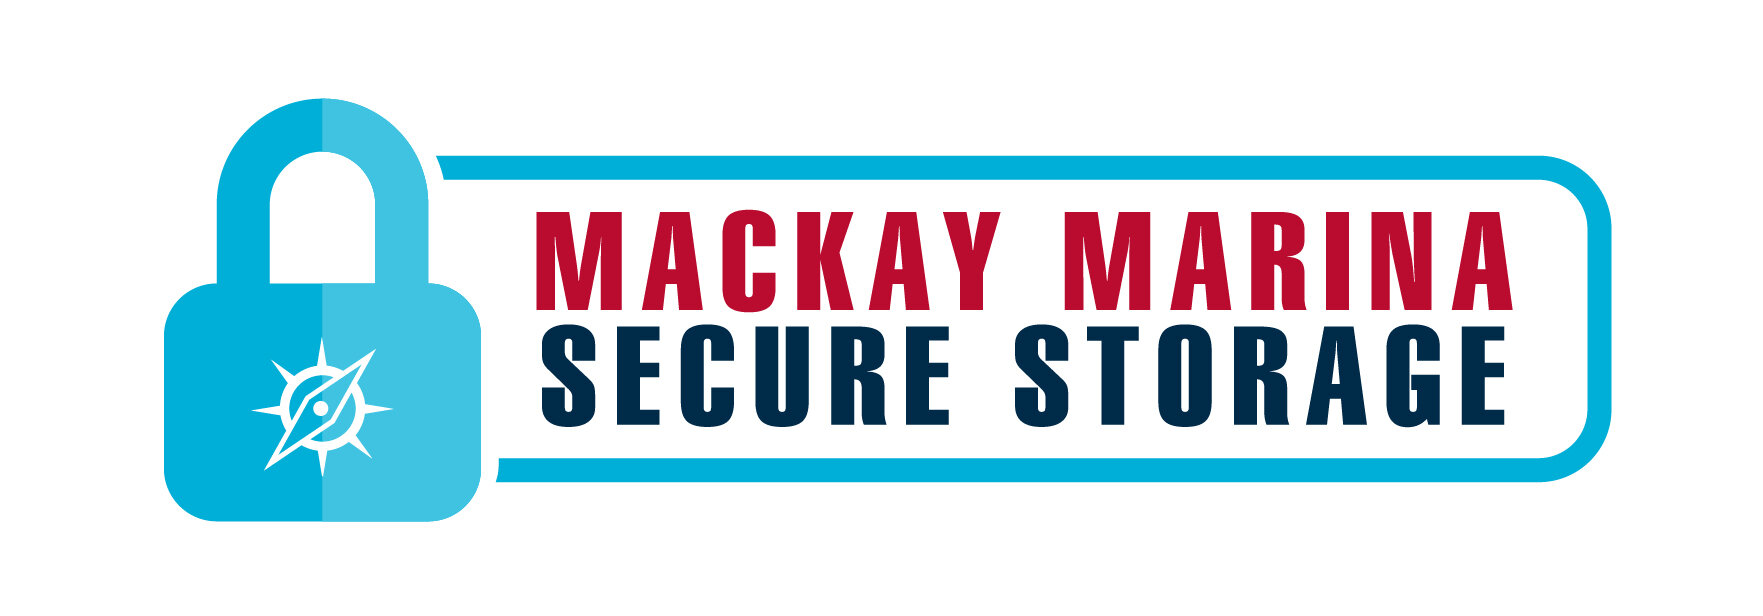 Mackay Marina Secure Storage